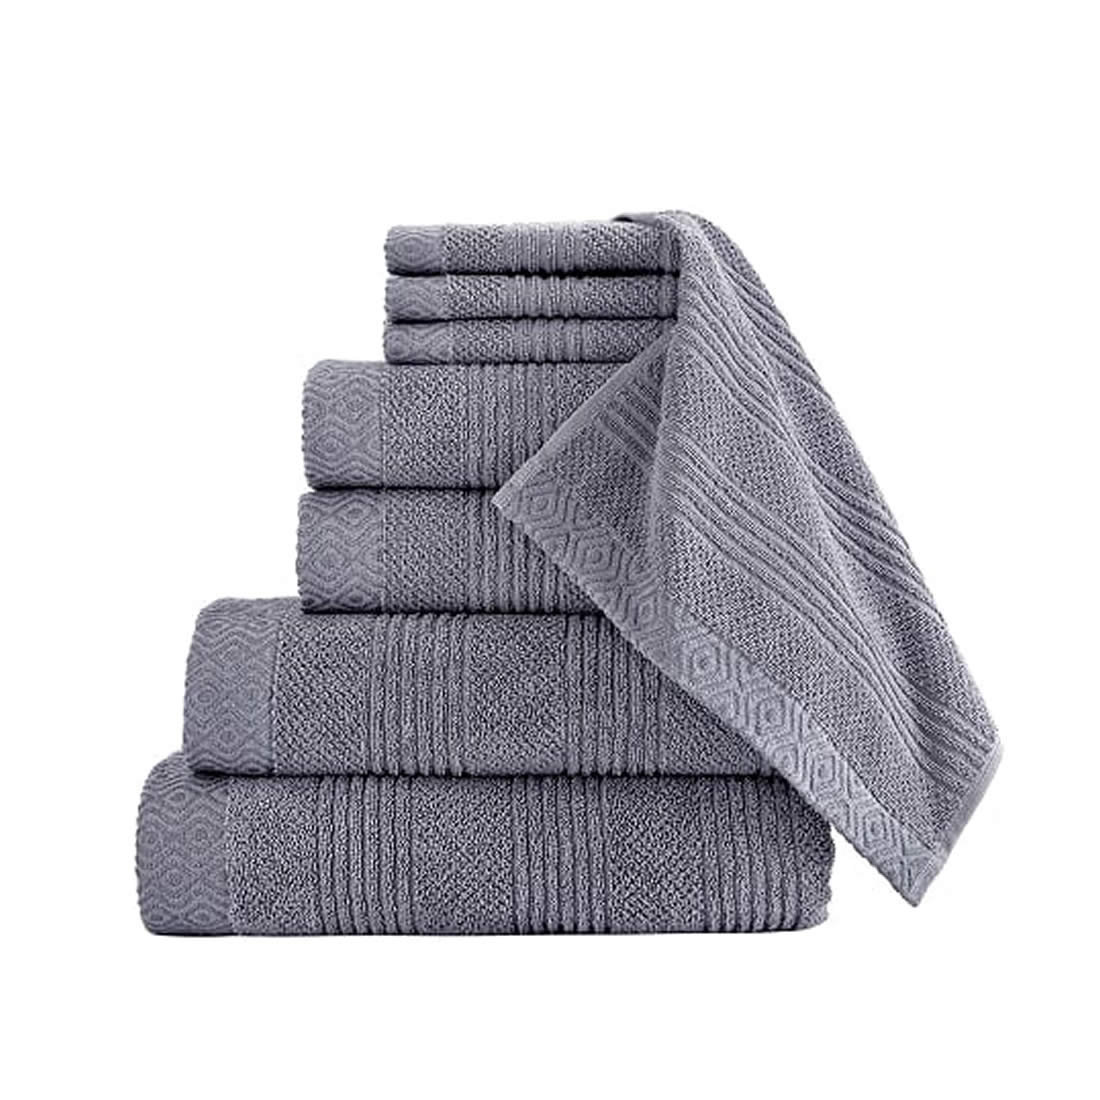 Aqua 30x60 and 24X48 Luxury Extra Large 8-Piece Turkish Towel Set with 4 Bath Towels